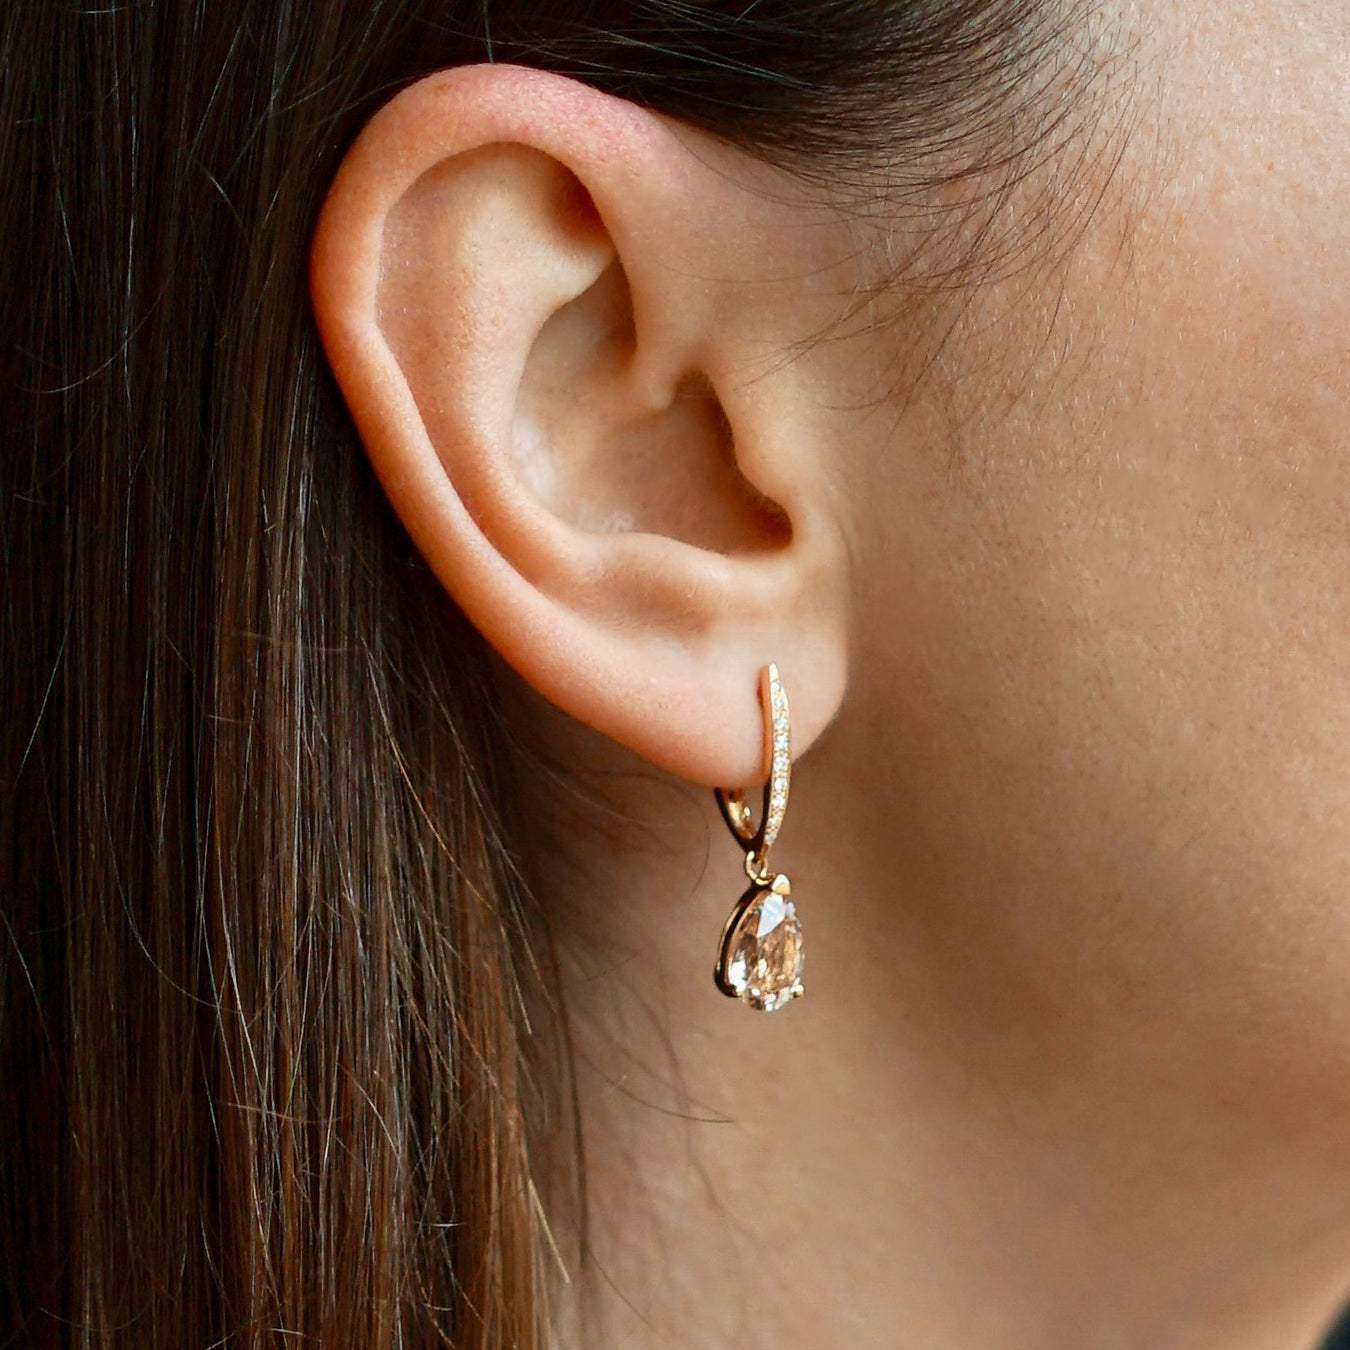 Morganite Earrings in Rose Gold